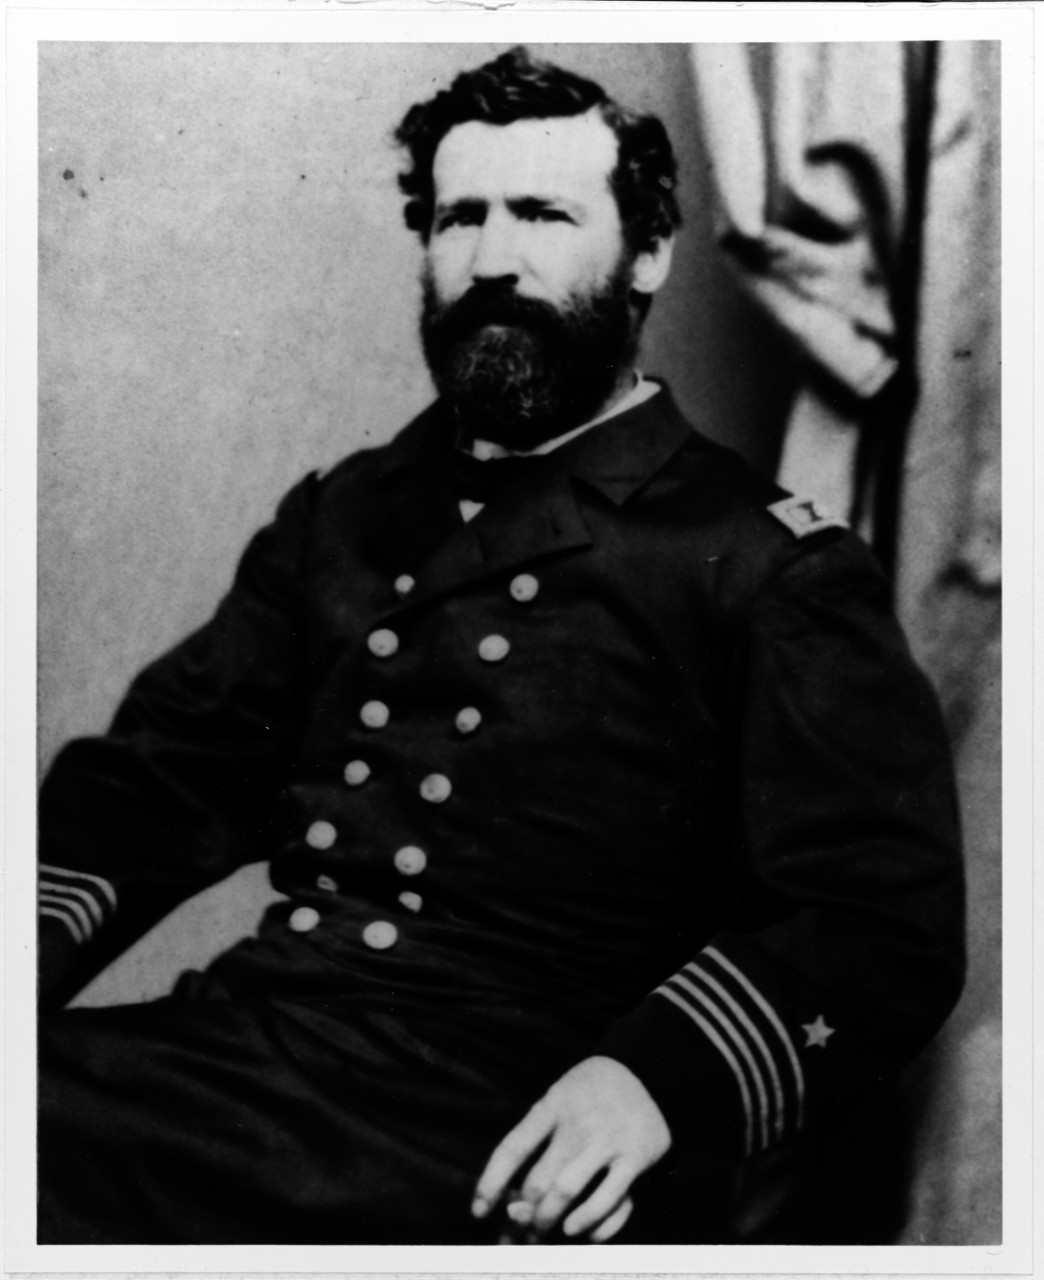 Commander Philip C. Johnson, USN